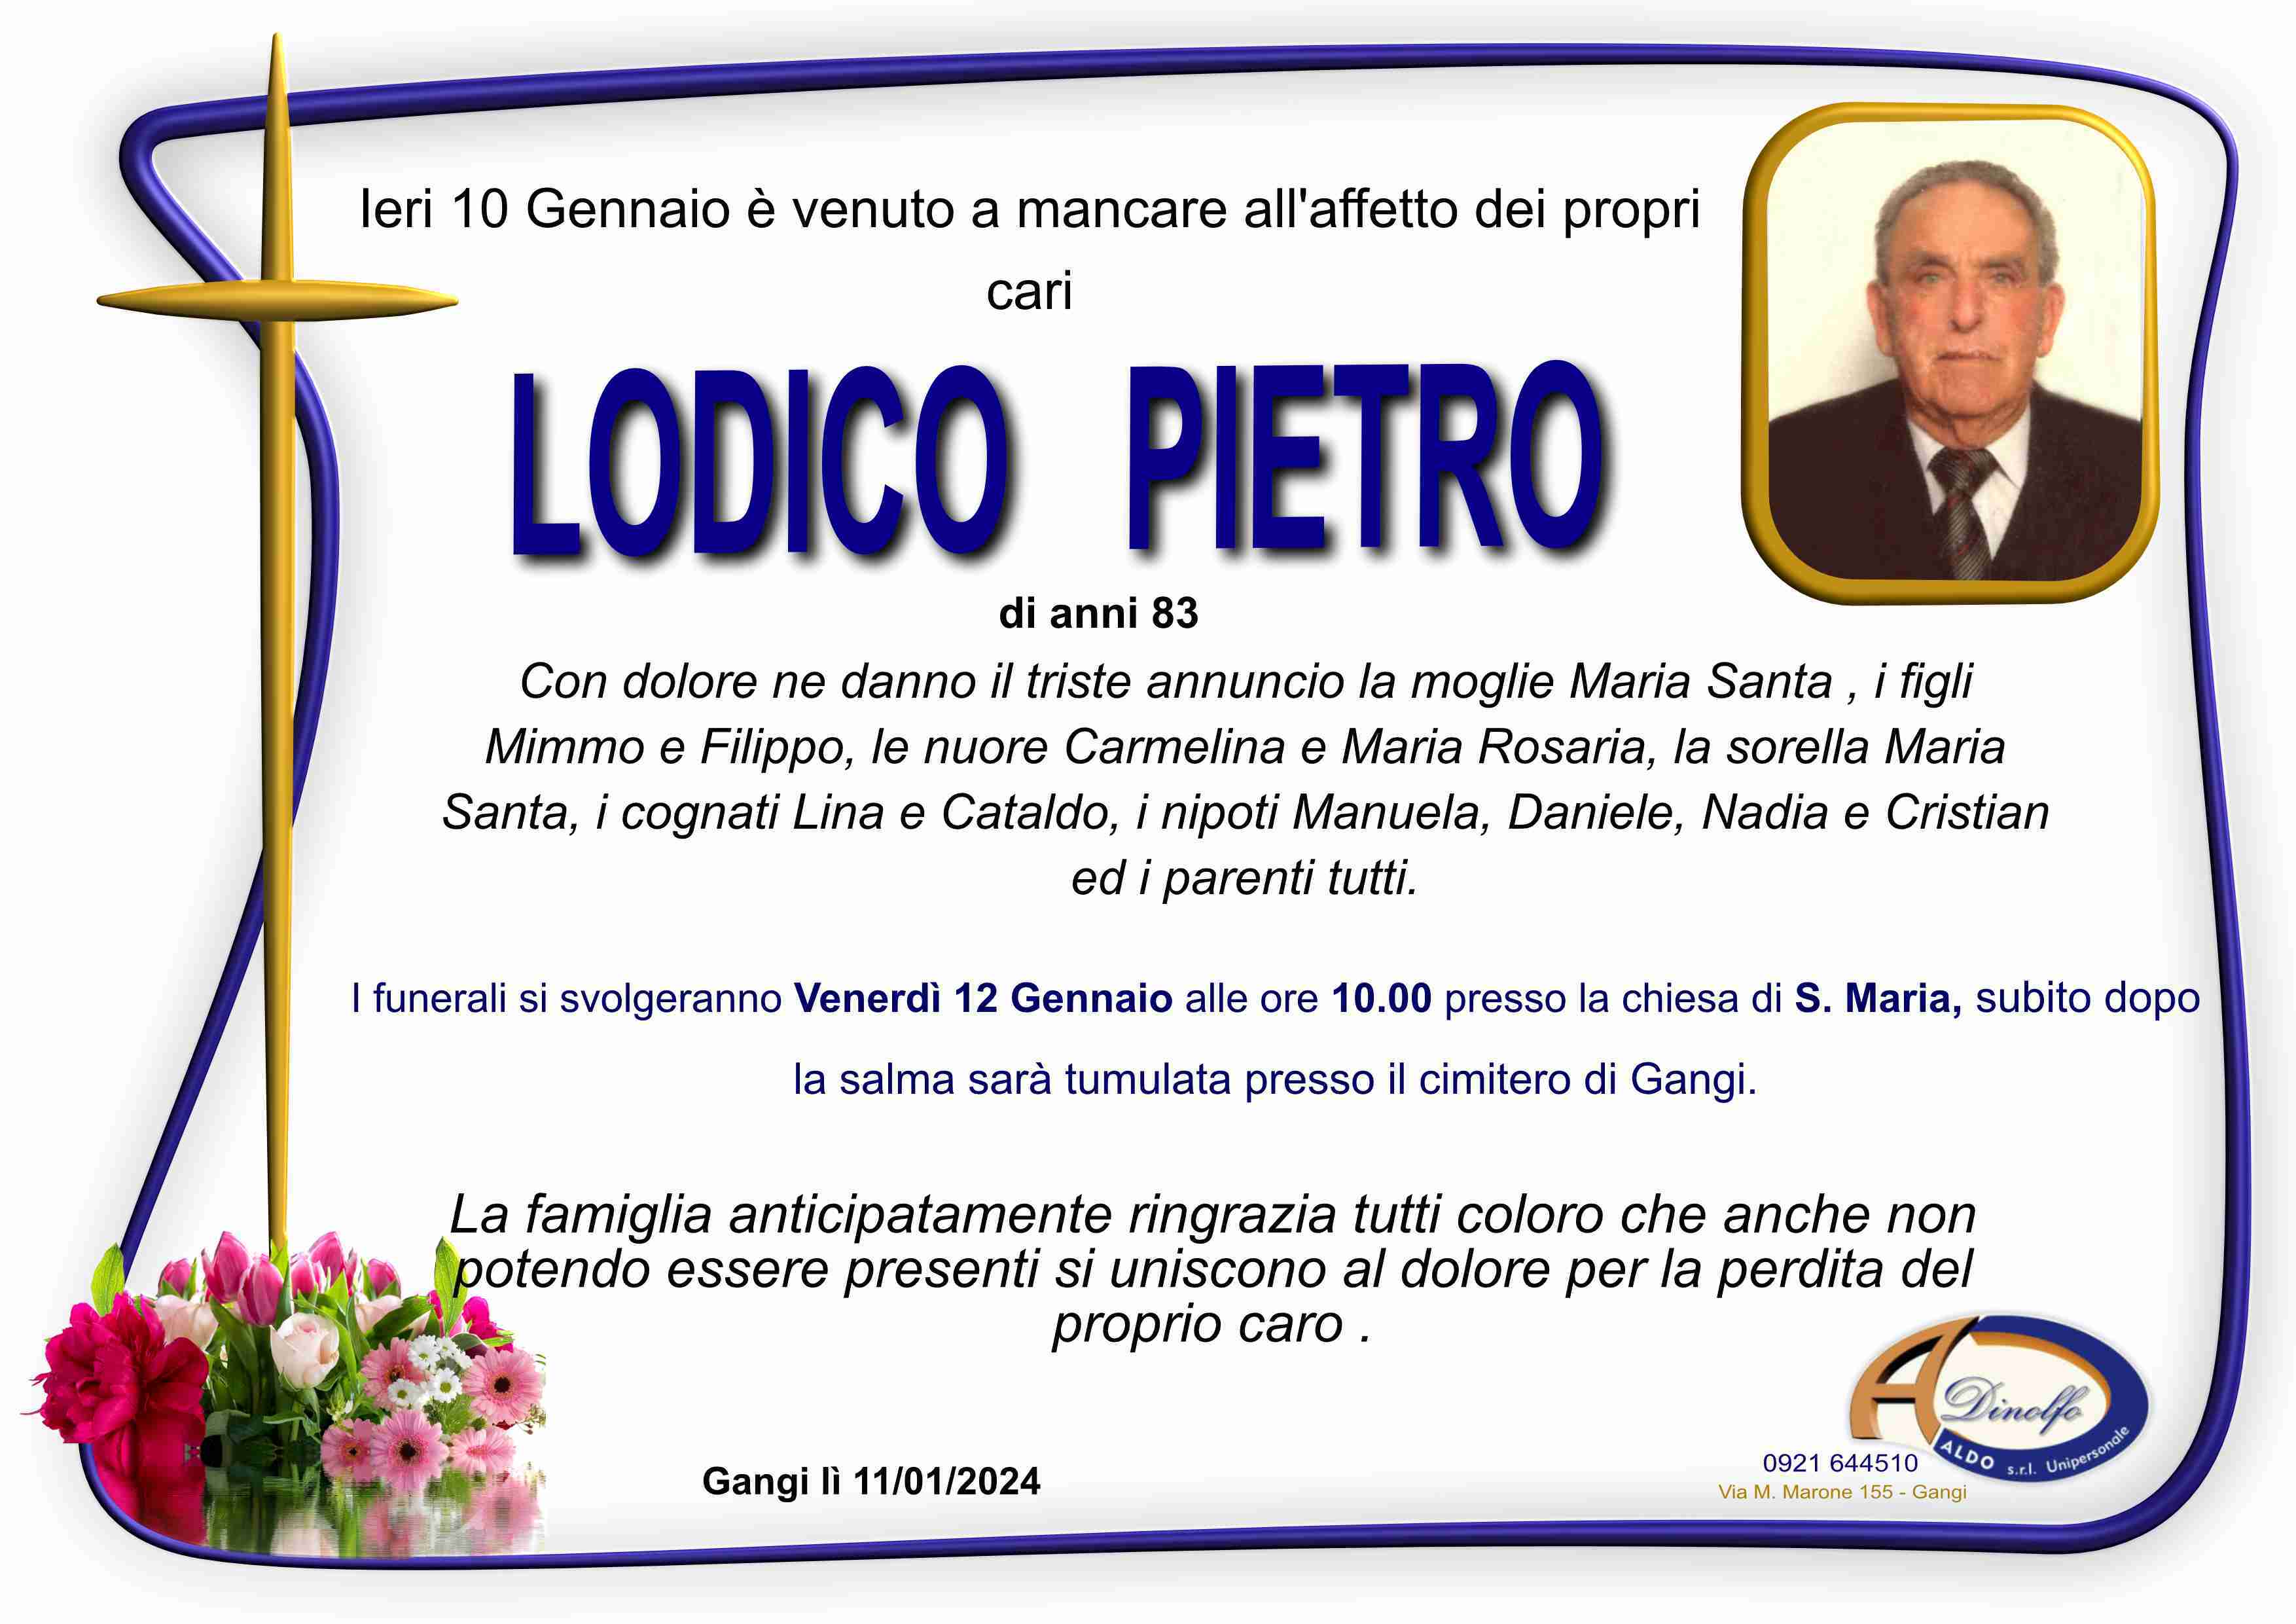 Pietro Lodico